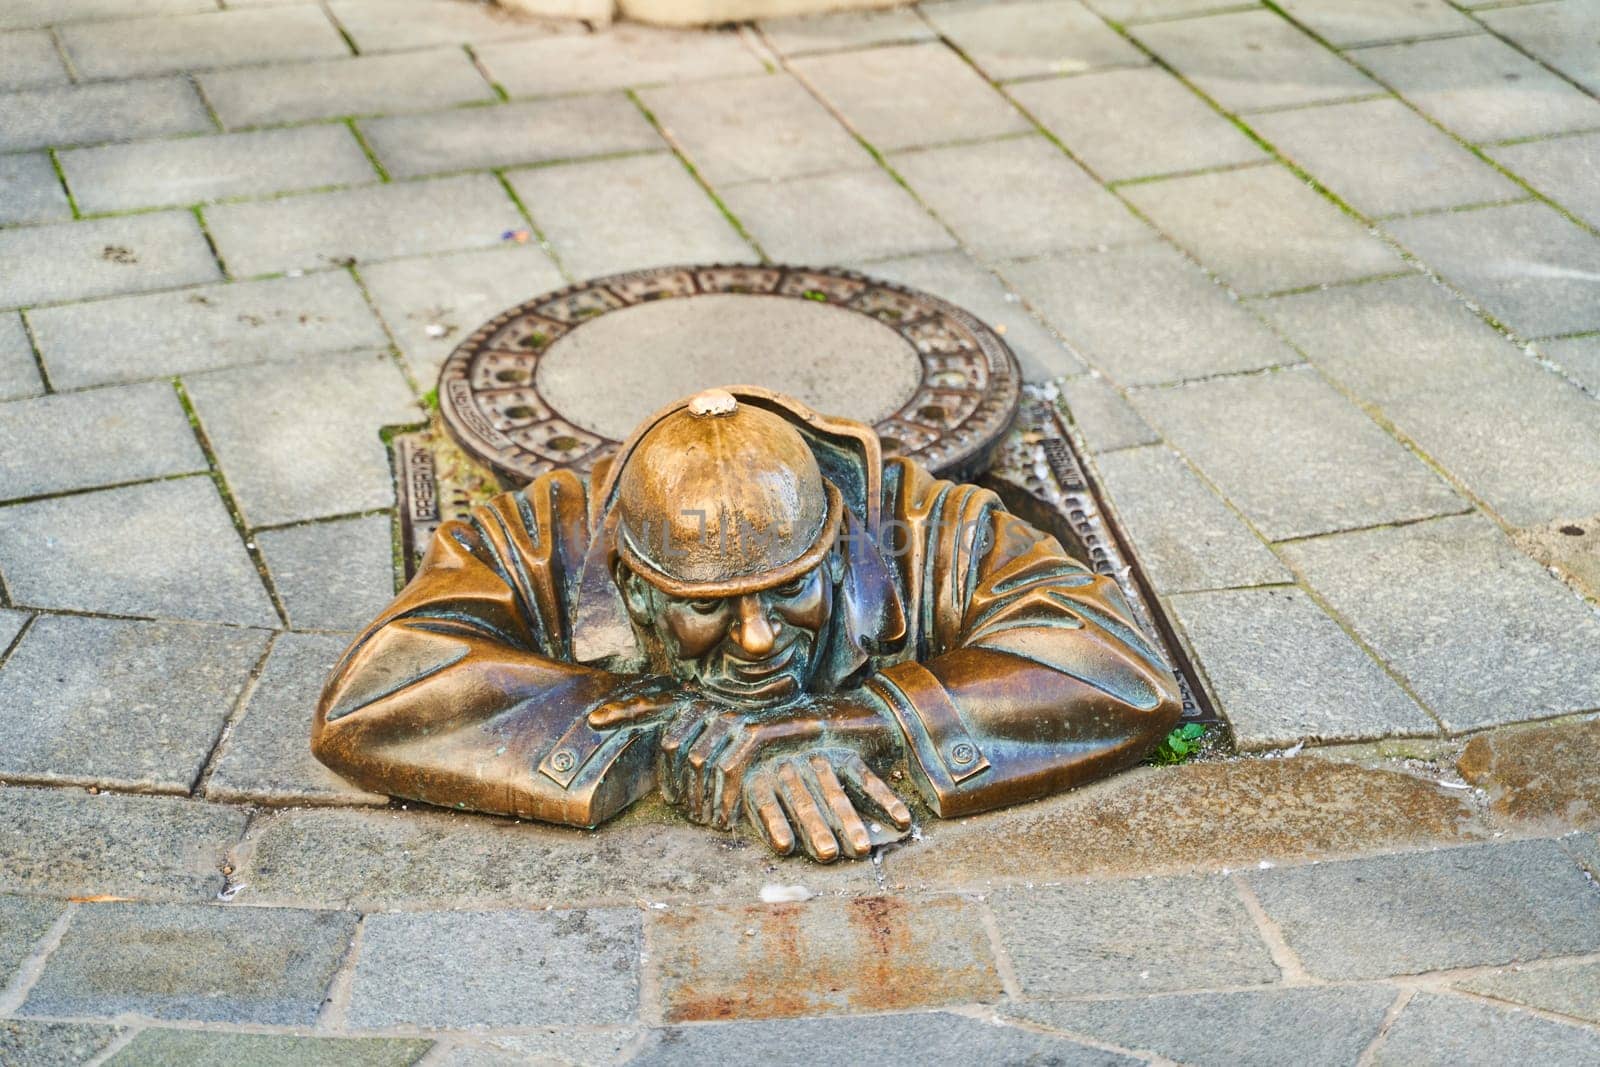 Slovakia, Bratislava - October 8, 2022: Monument to the plumber in Bratislava by driver-s